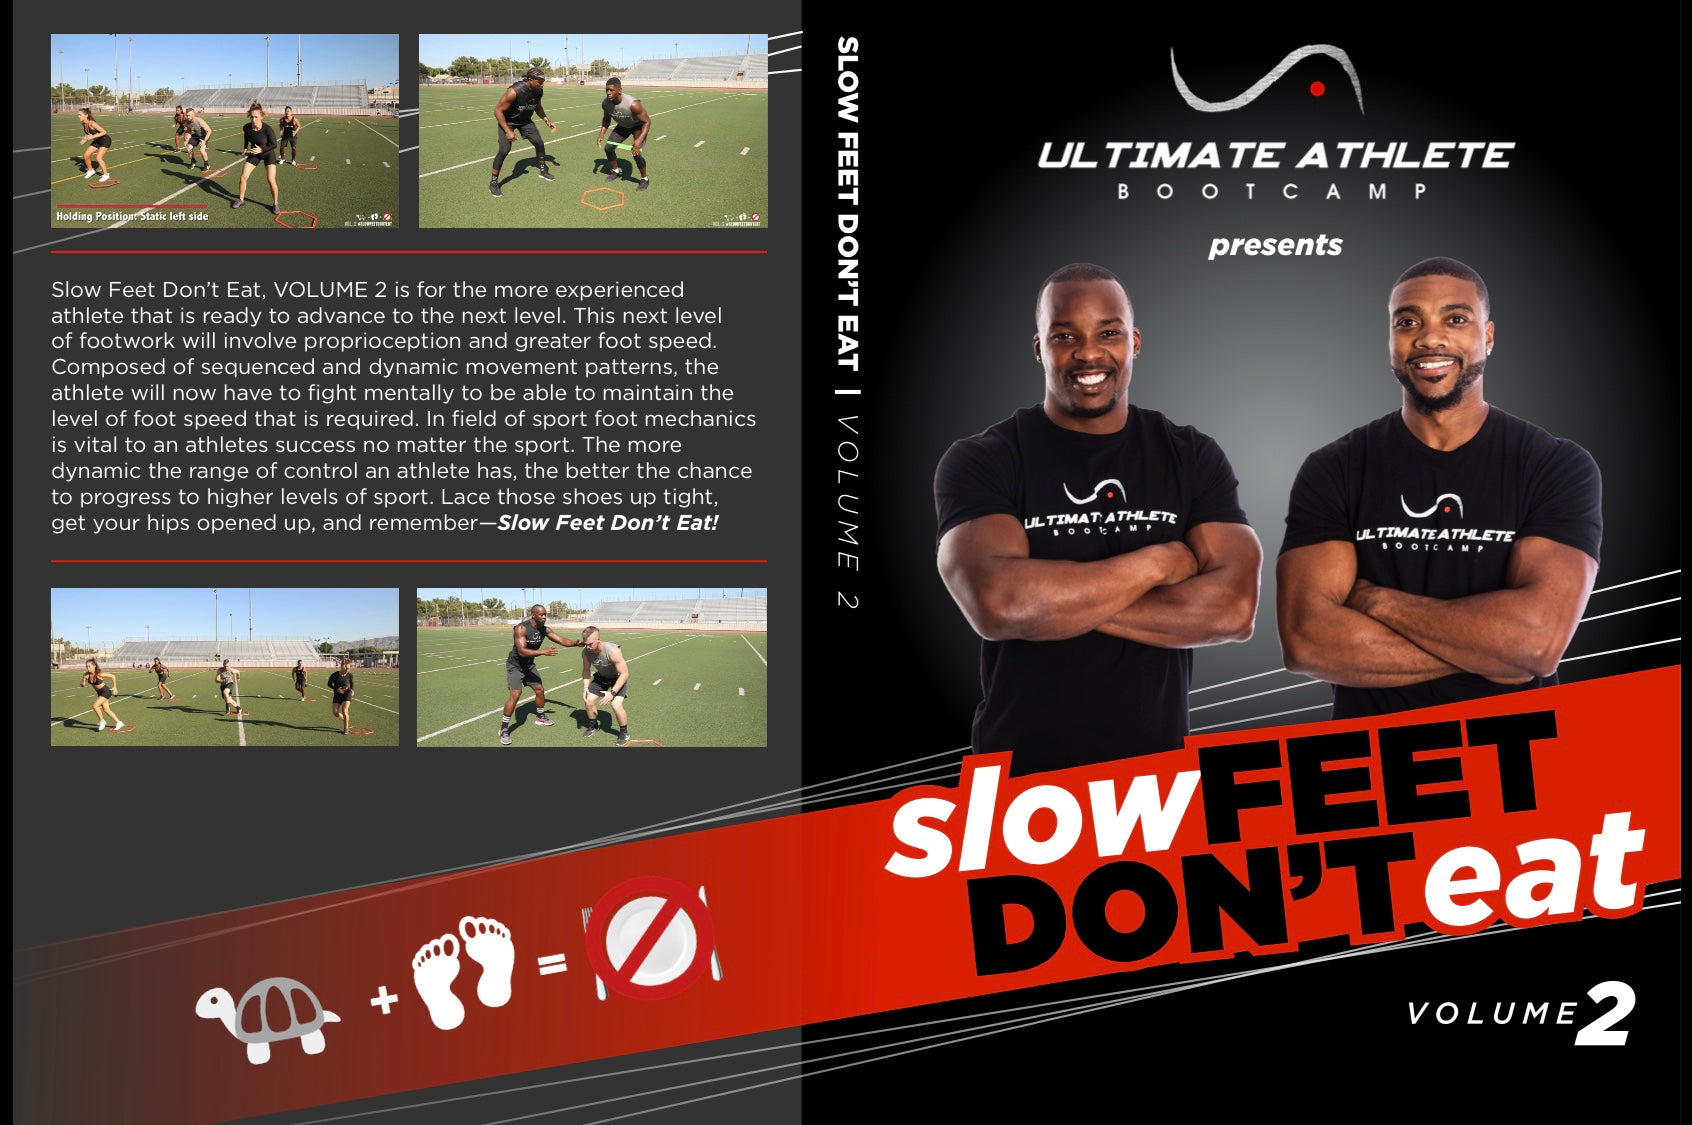 Slow Feet Don't Eat Vol. 2 "Training Video"